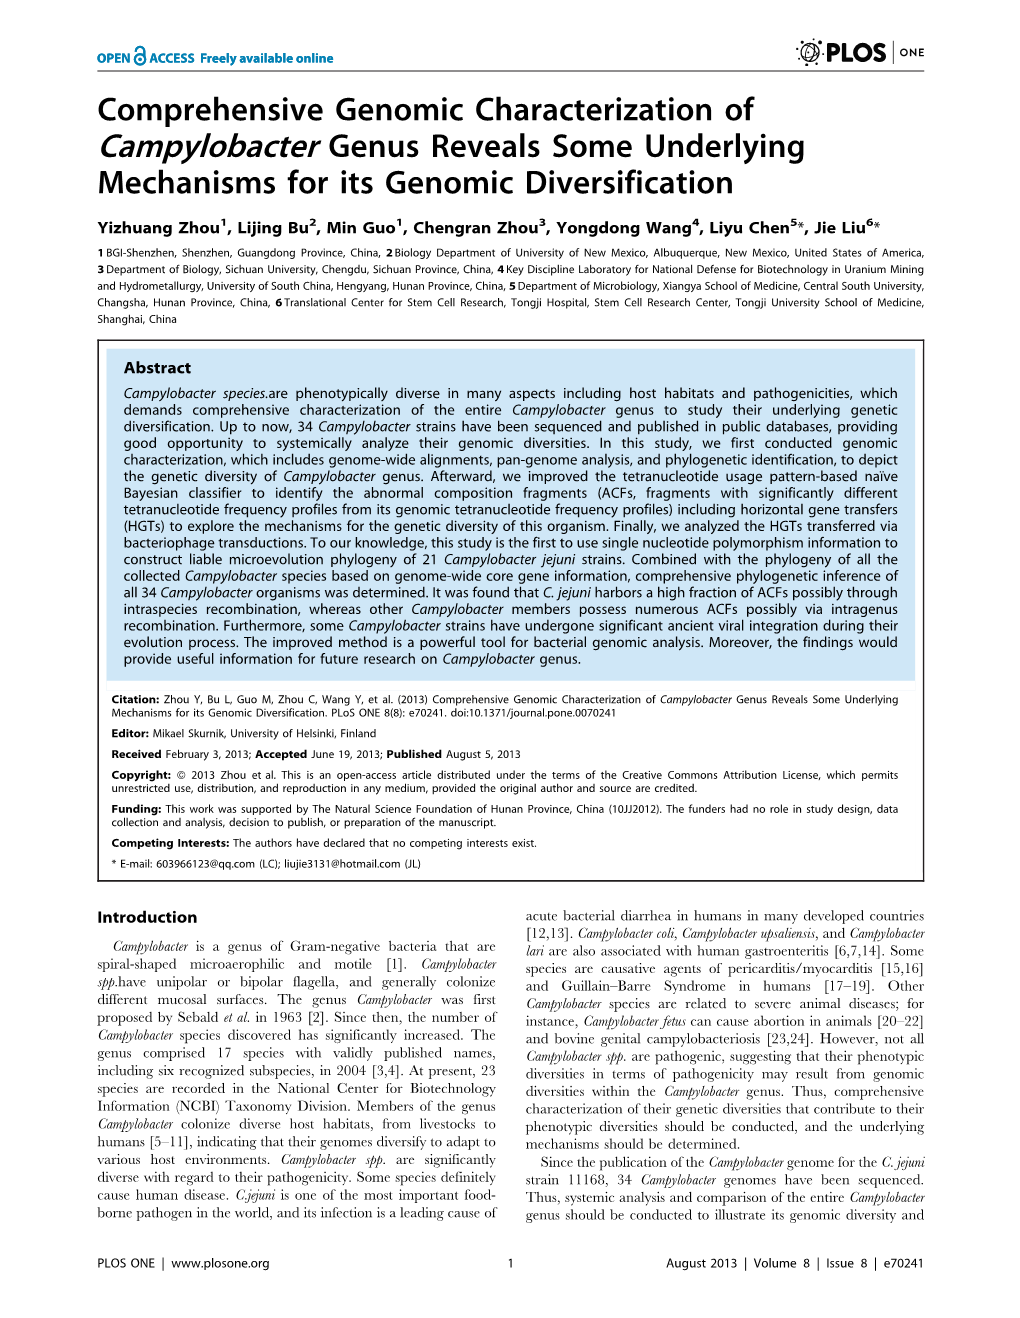 Comprehensive Genomic Characterization of Campylobacter Genus Reveals Some Underlying Mechanisms for Its Genomic Diversification